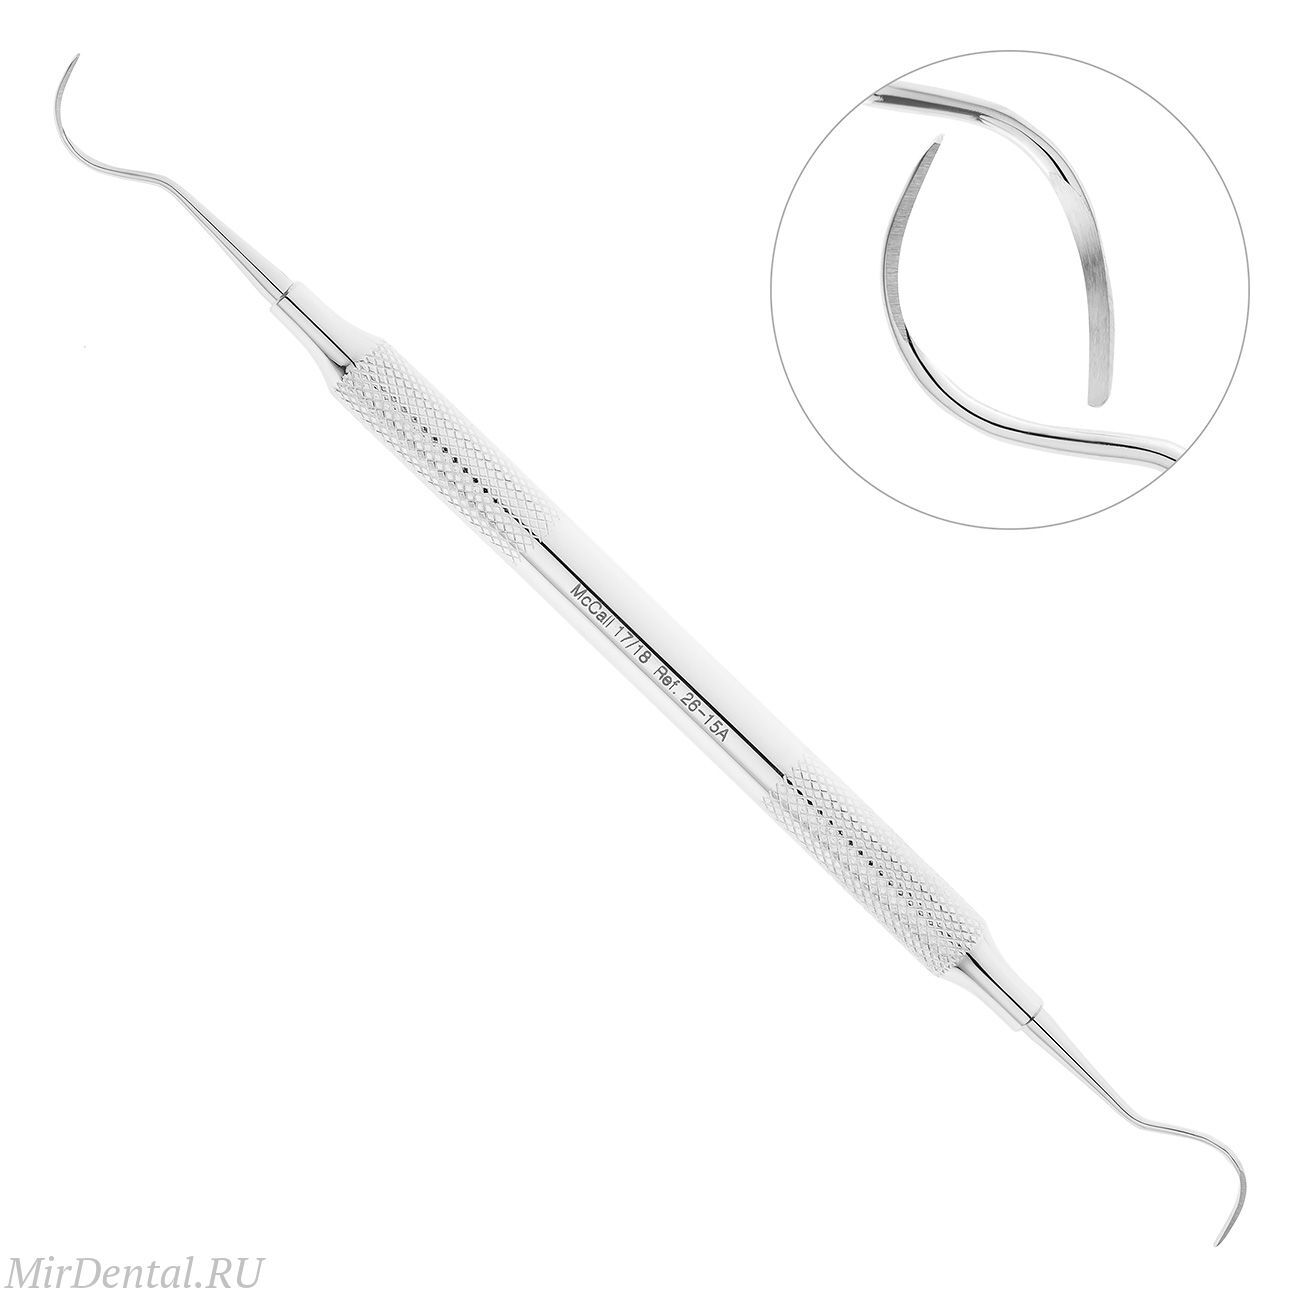 Скейлер парадонтологический McCall, форма 17/18, ручка диаметр 8 мм, 26-15A*